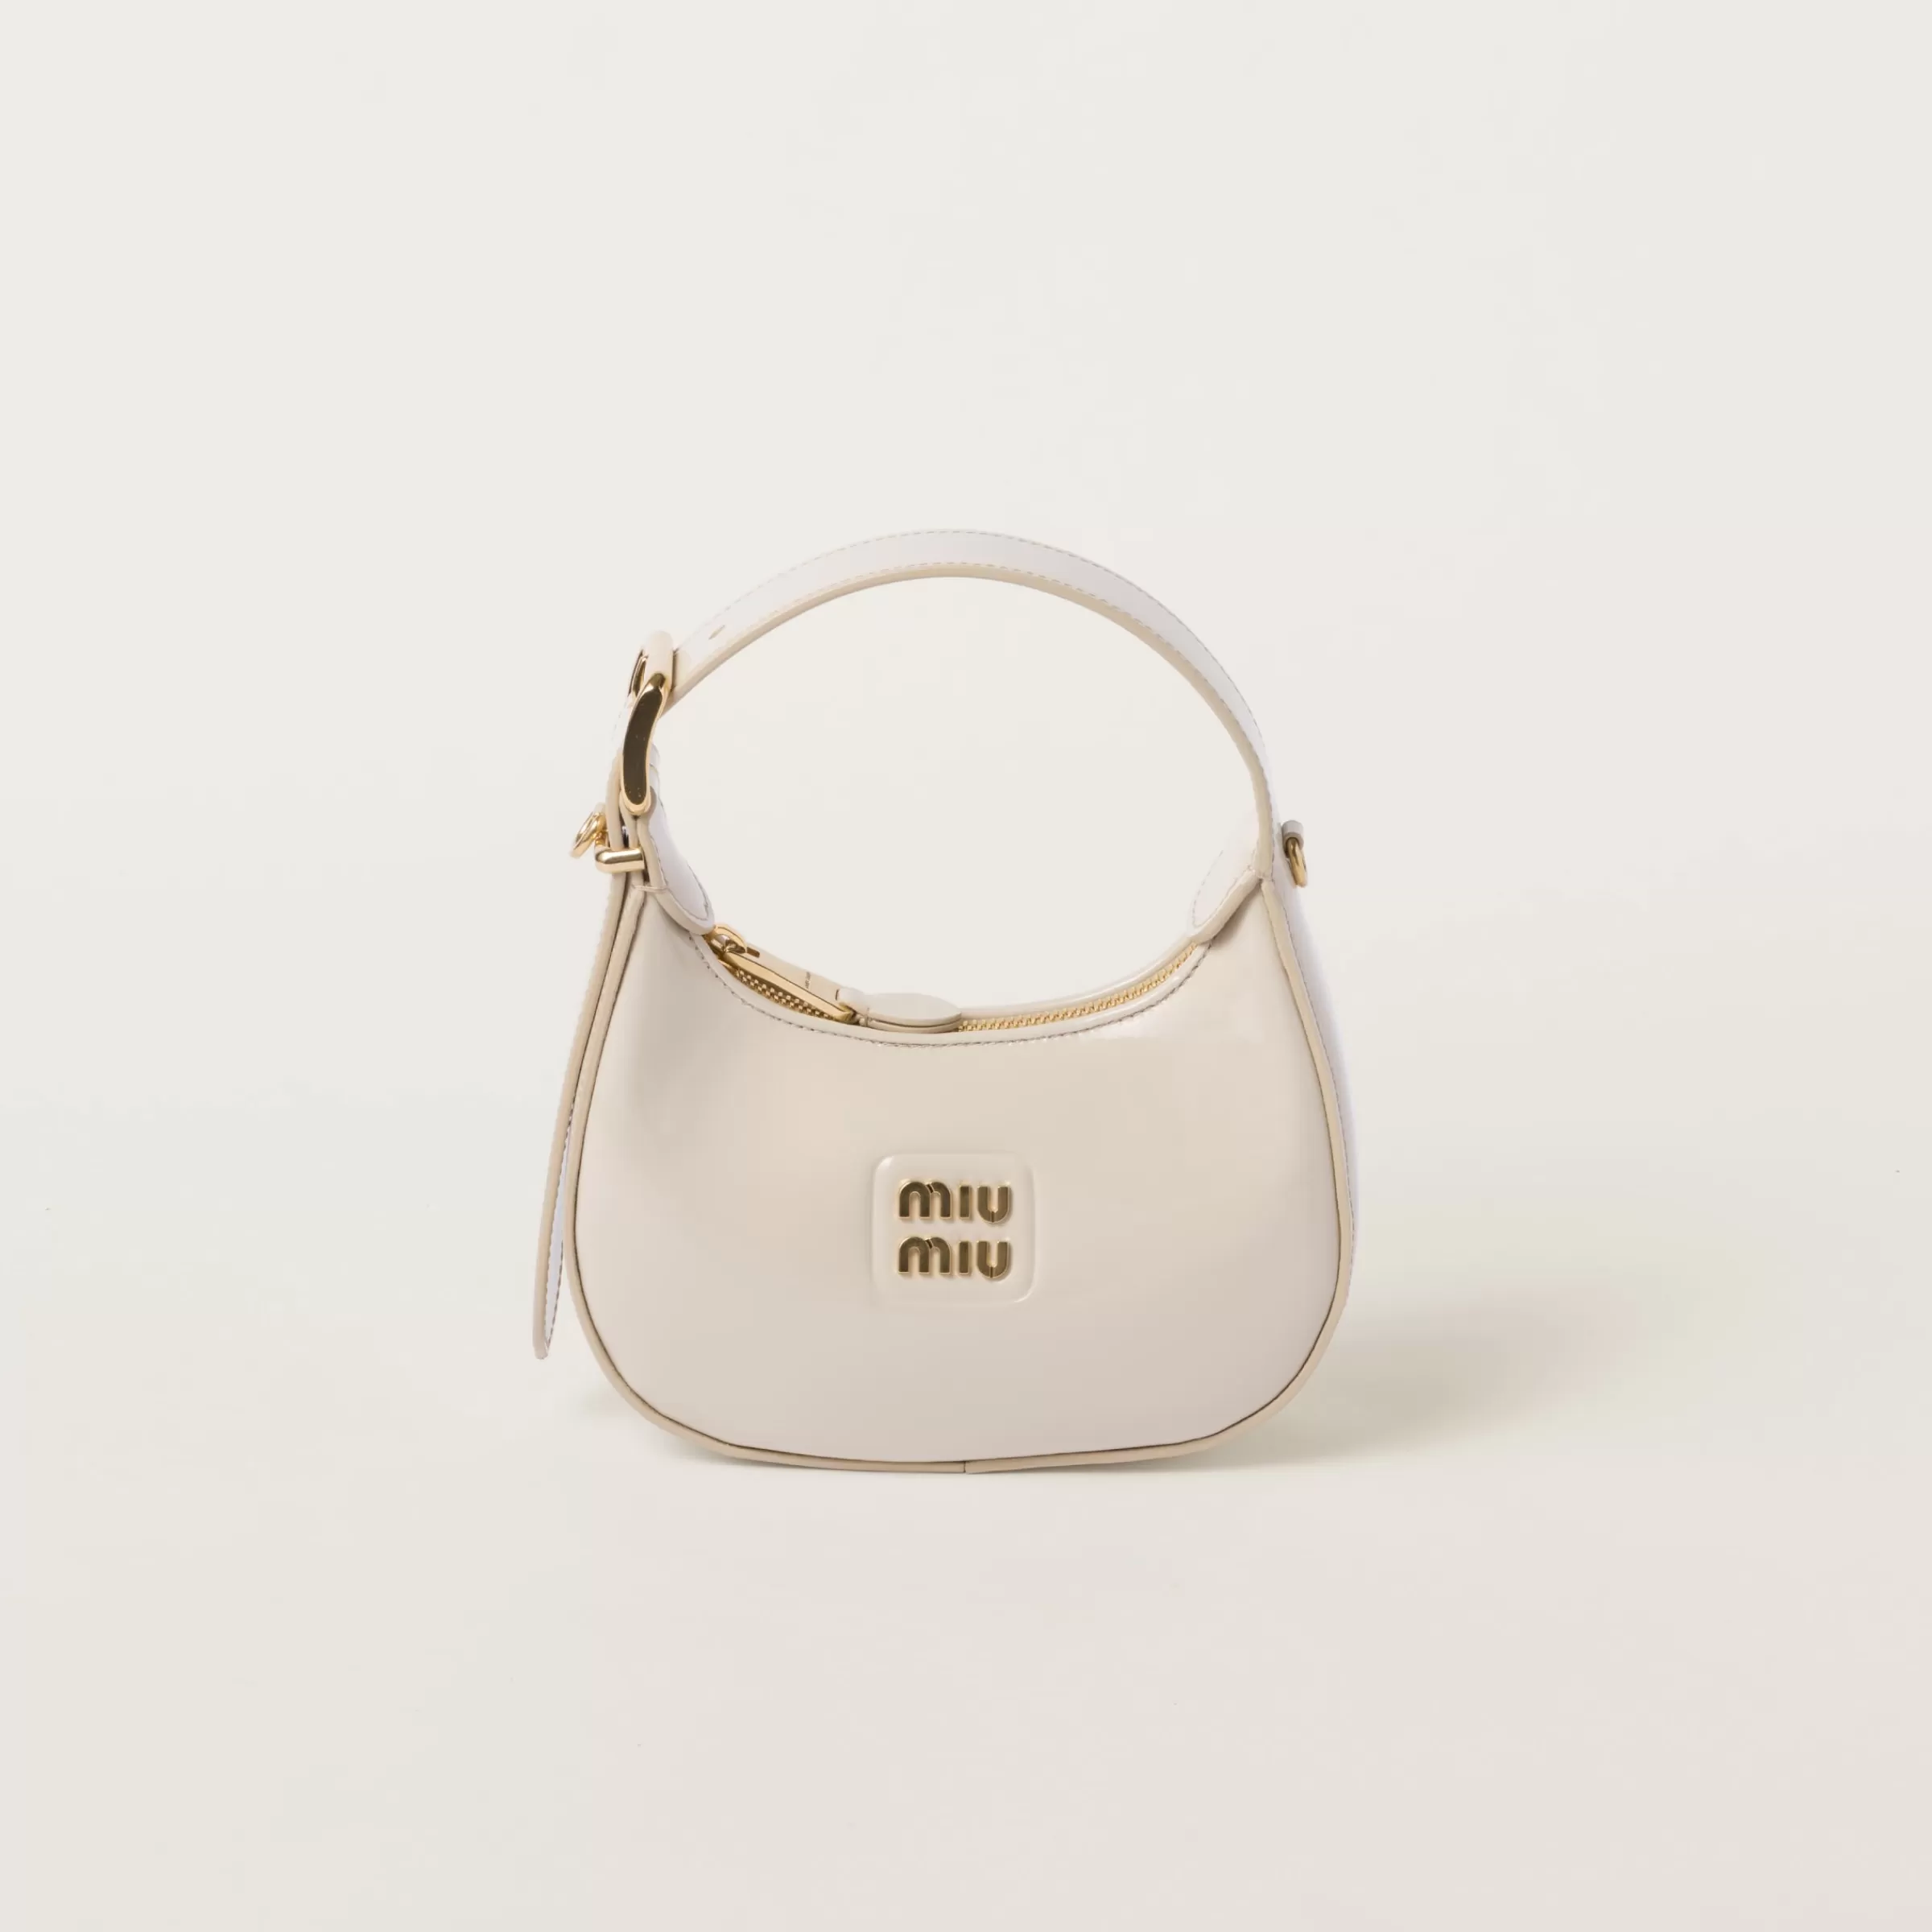 Miu Miu Patent Leather Hobo Bag |